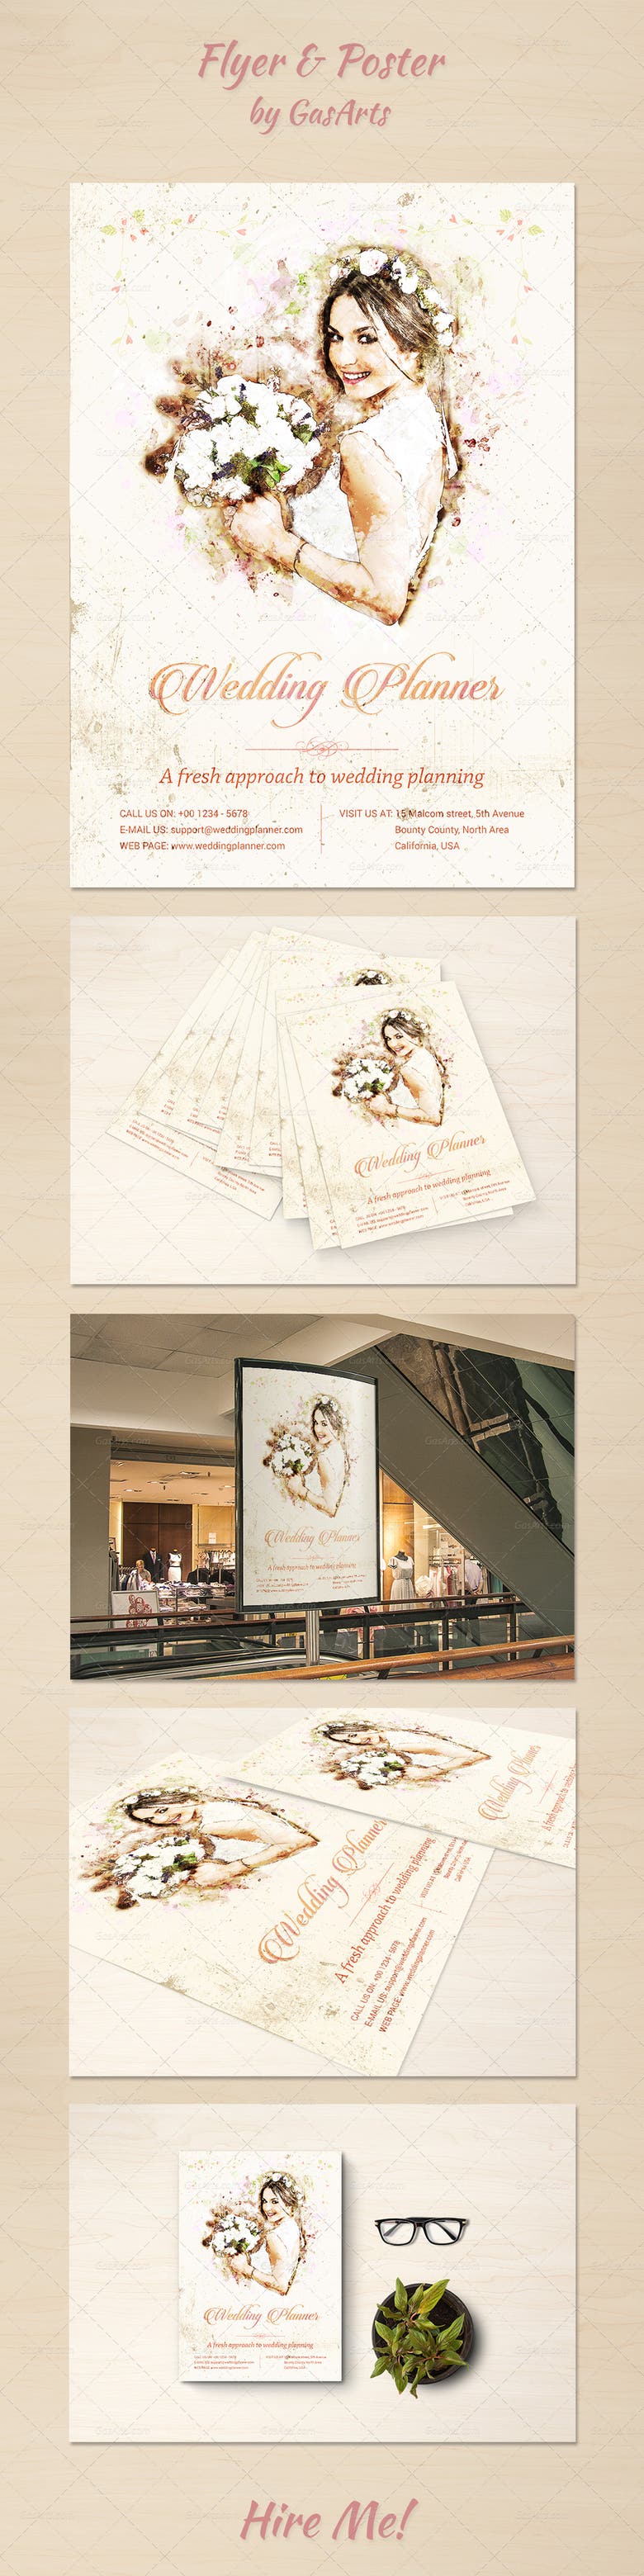 Wedding Planner Flyer, Poster and Advertisement Design